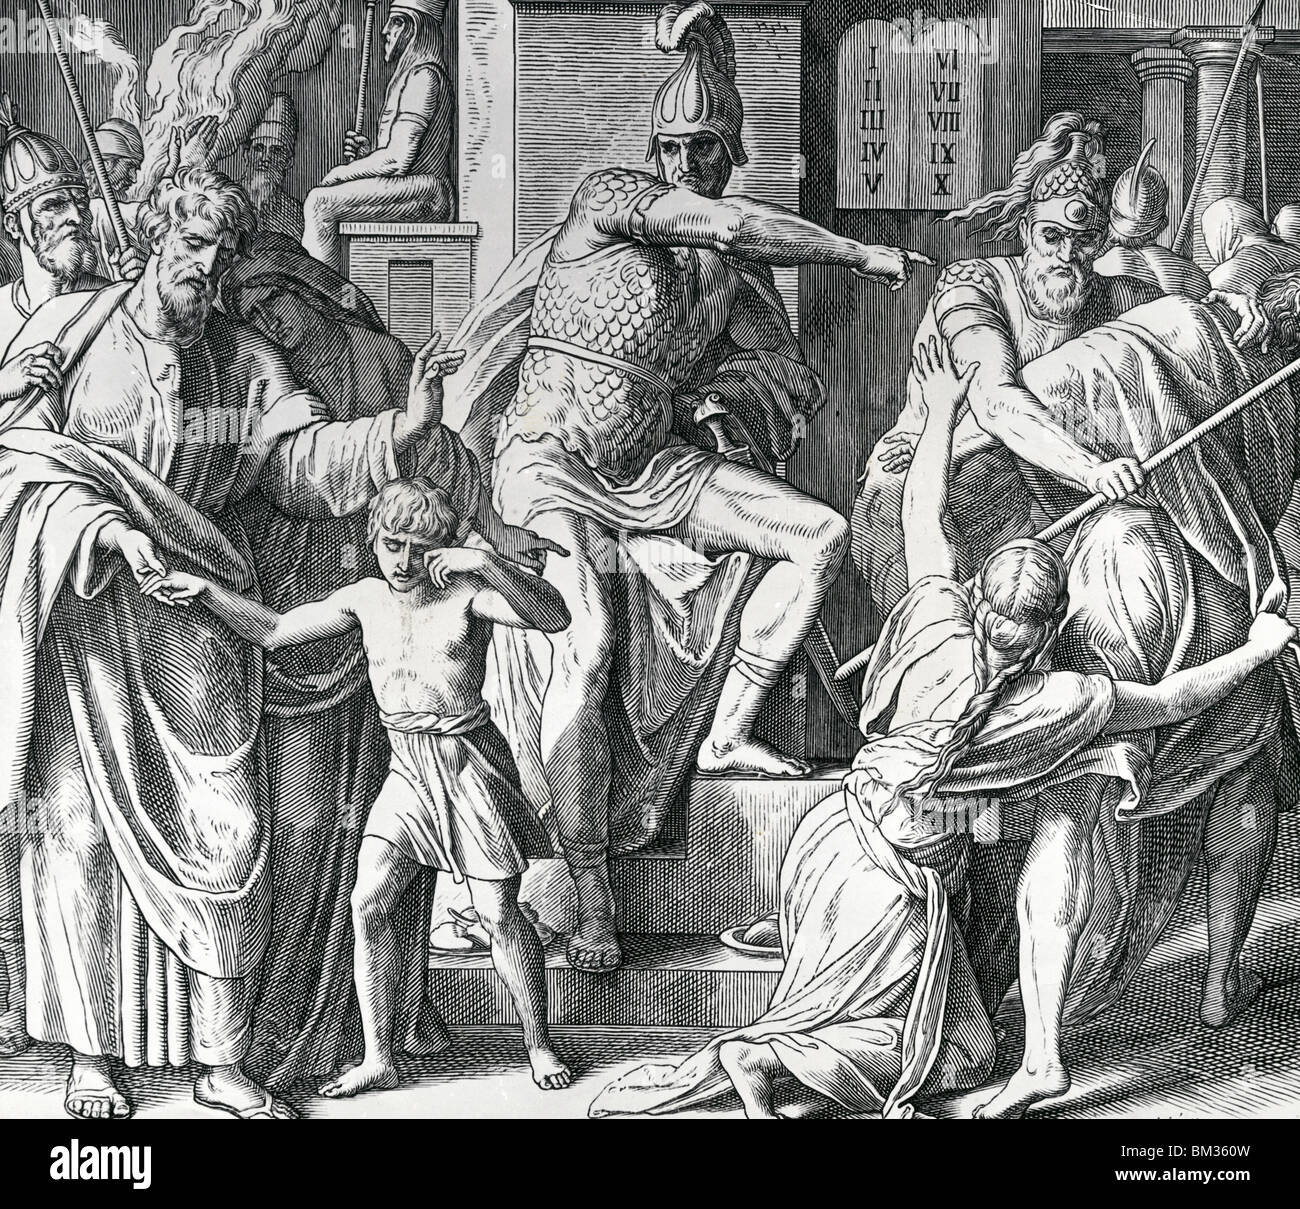 Antiochus Persecution of Israelites by Julius Schnorr von Carolsfeld, illustration, (1794-1872) Stock Photo